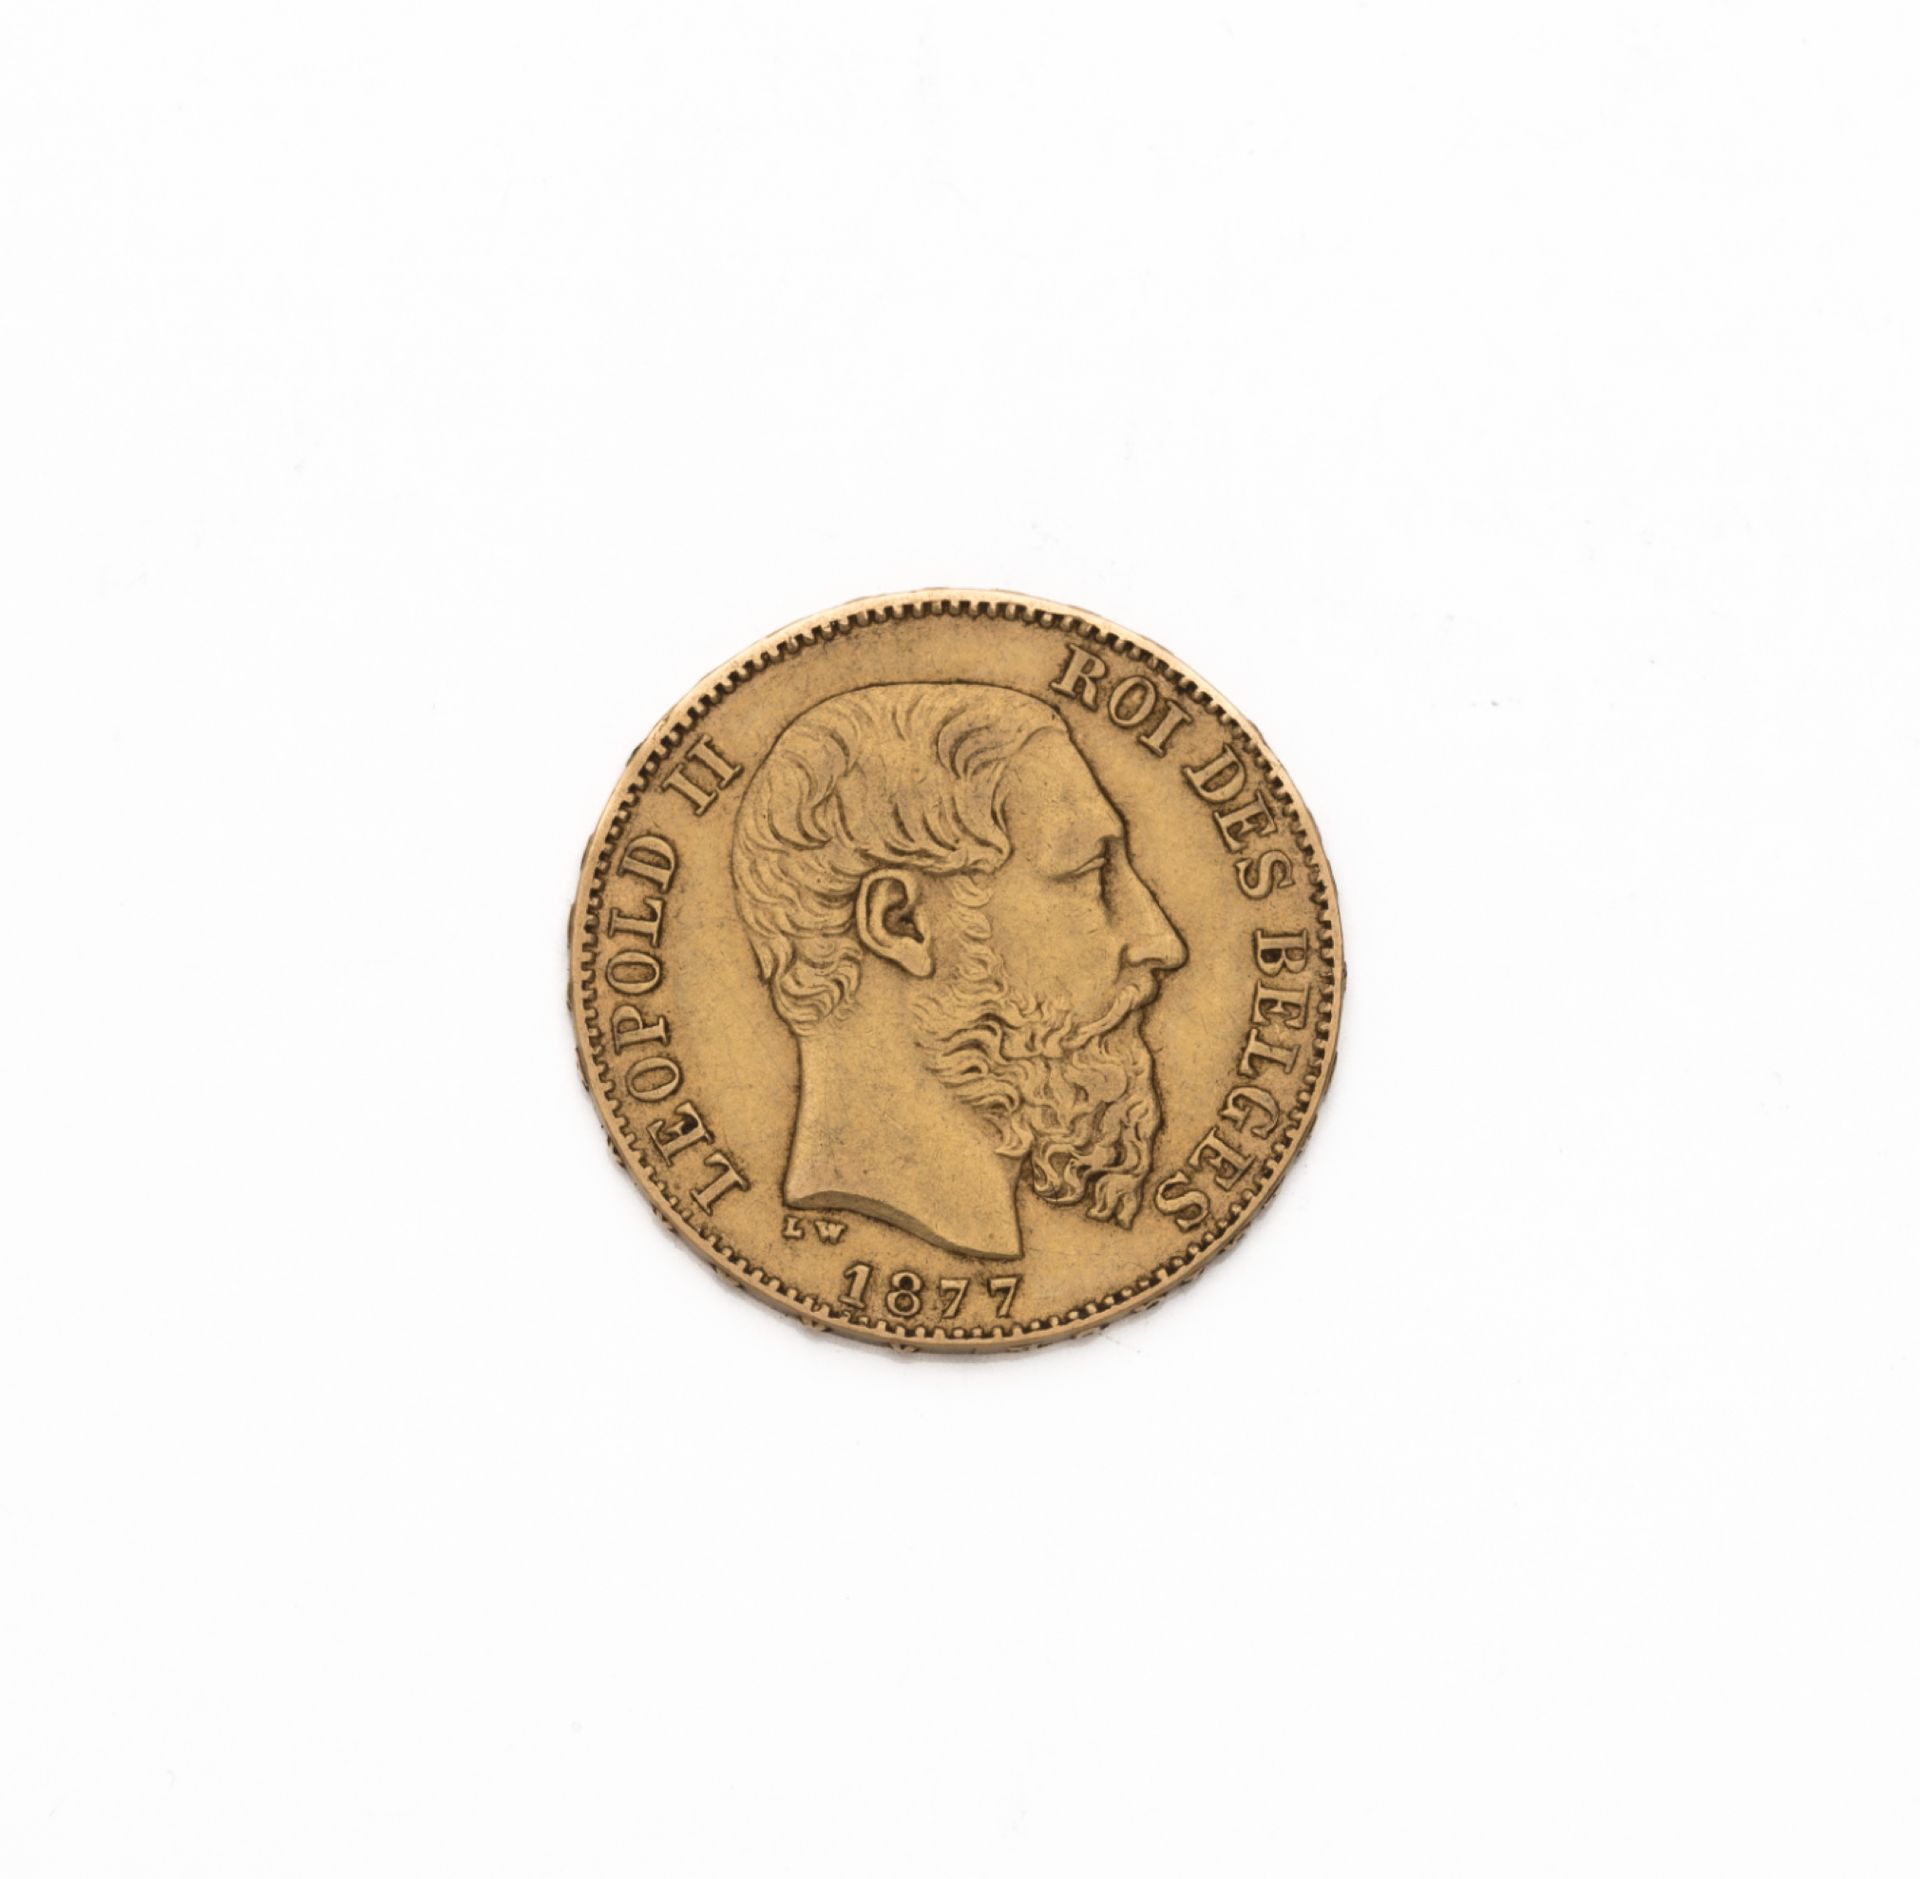 Null BELGIQUE
20 franc or, Léopold II. 1877 
Poids : 6,4 g